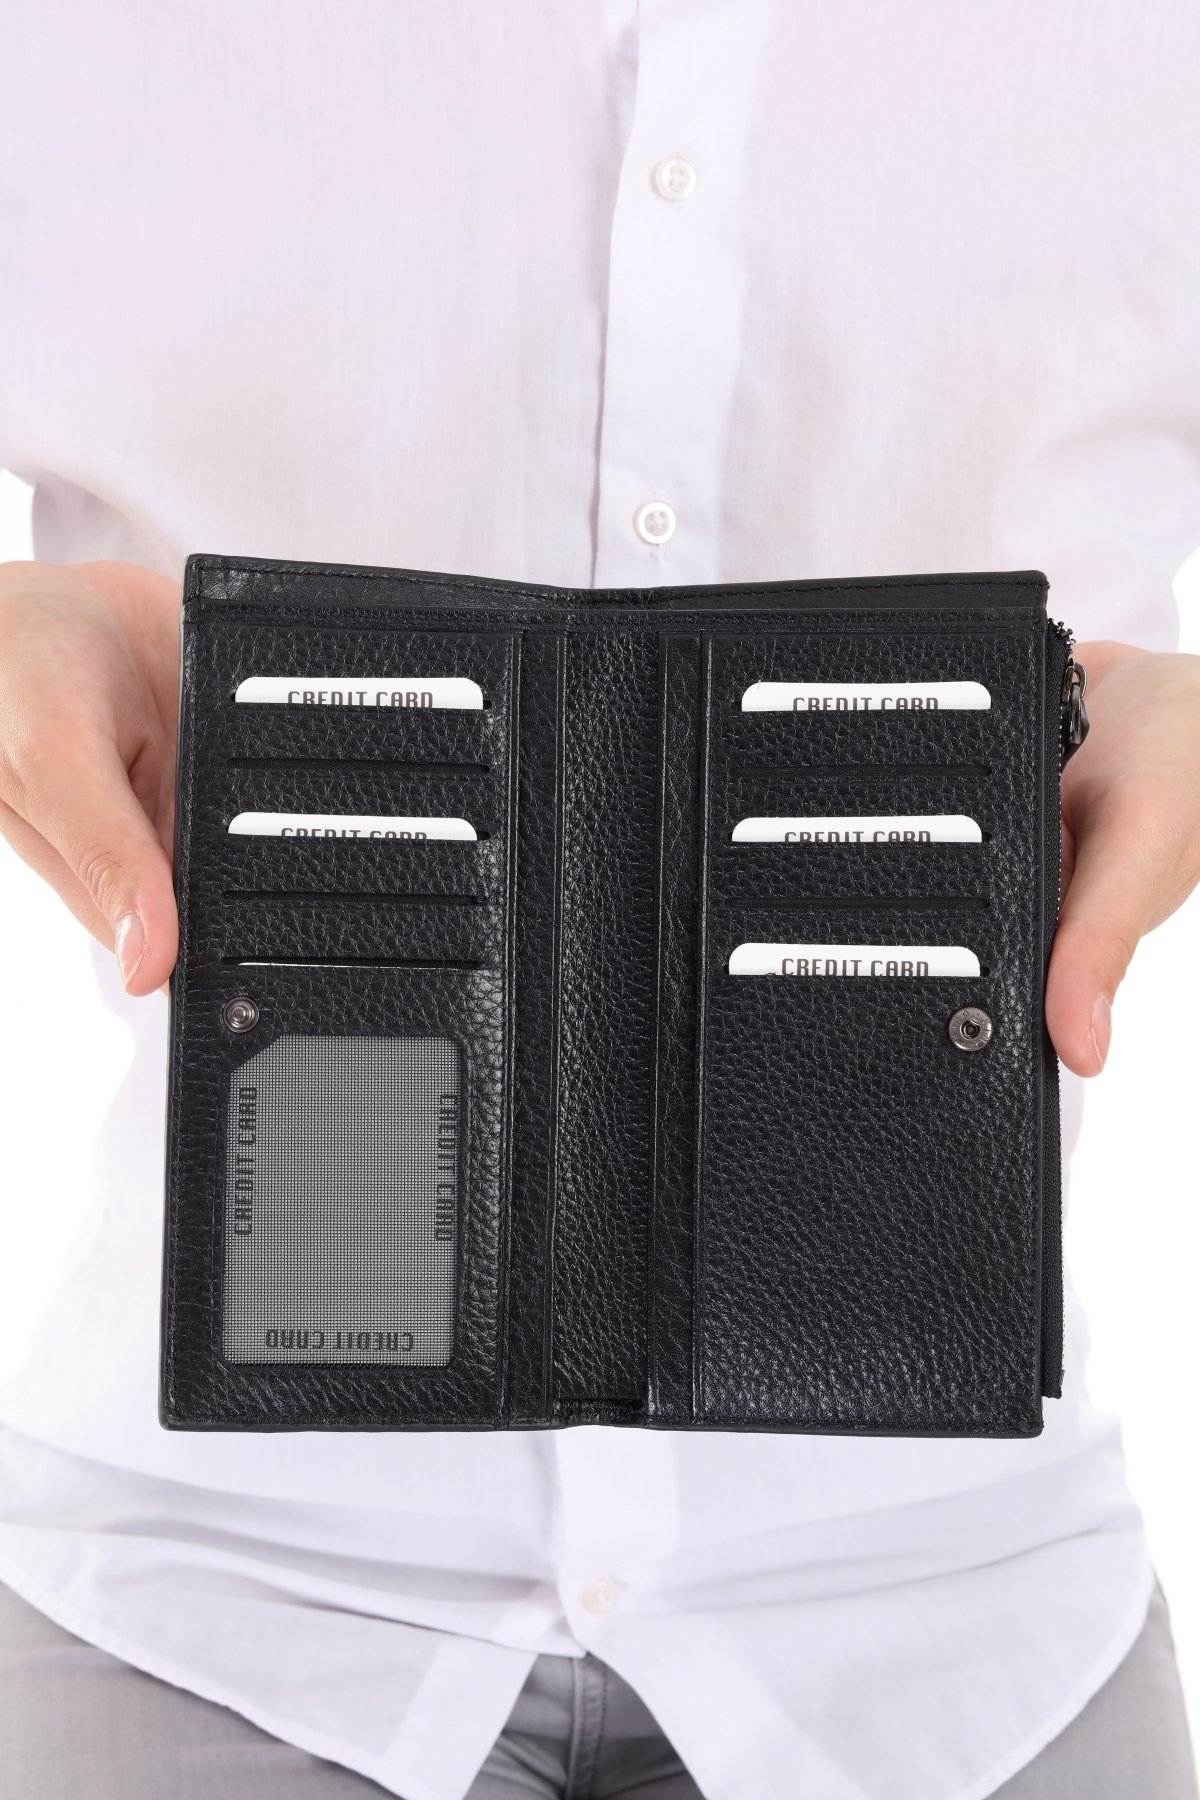 3760 - Leather wallet - Black - bakkaclothing